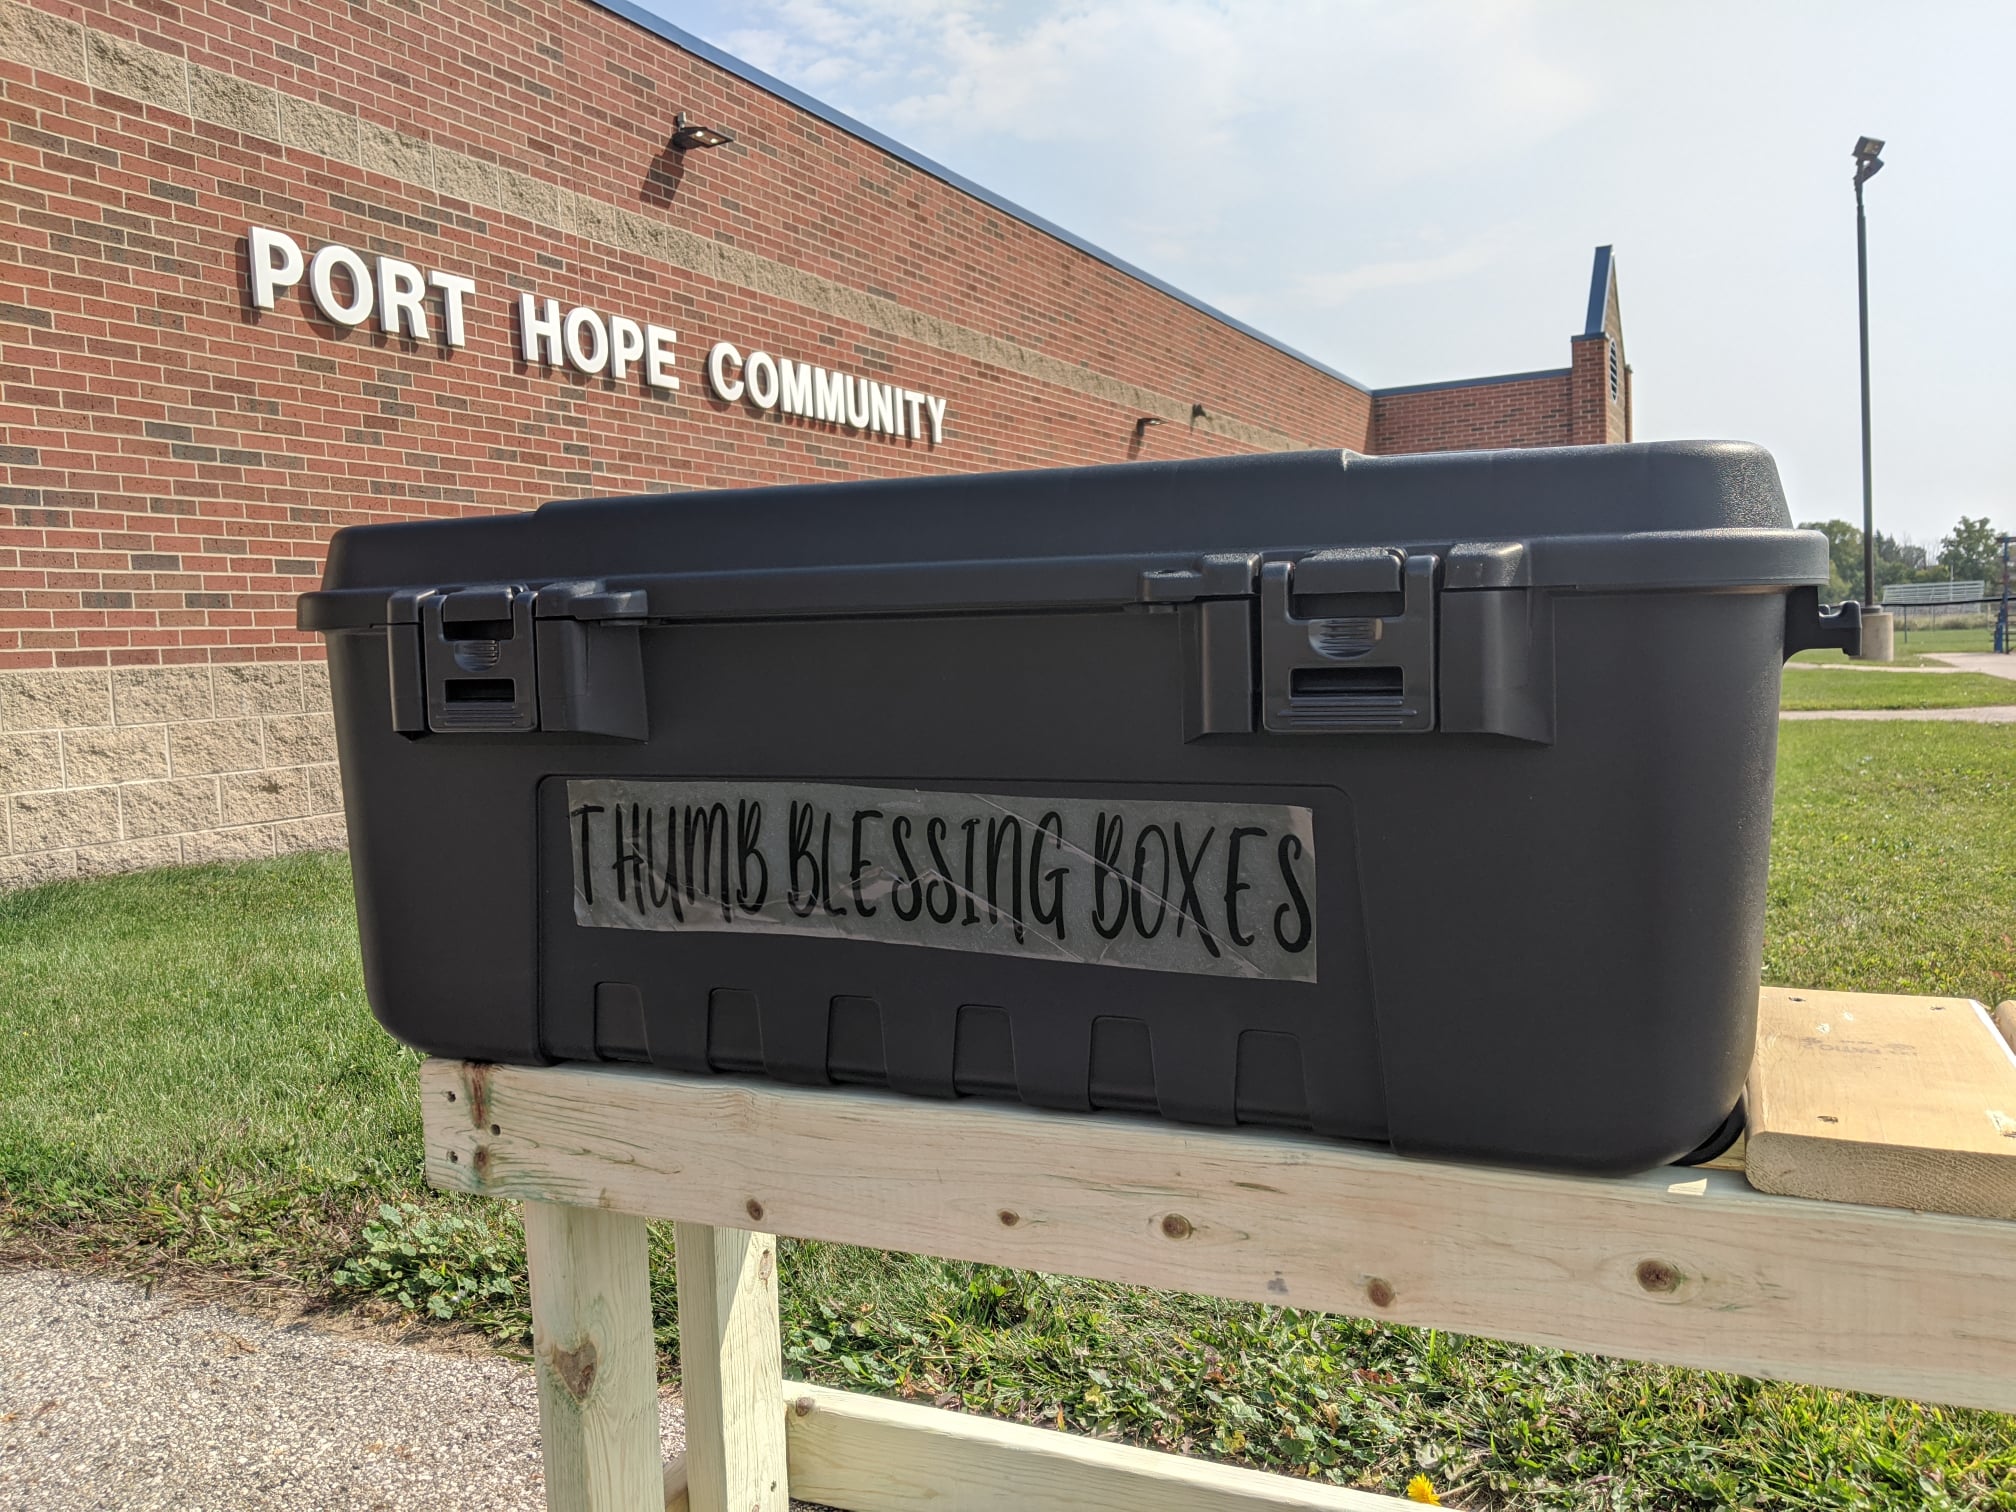 Port Hope Thumb Blessing Box Photo 1